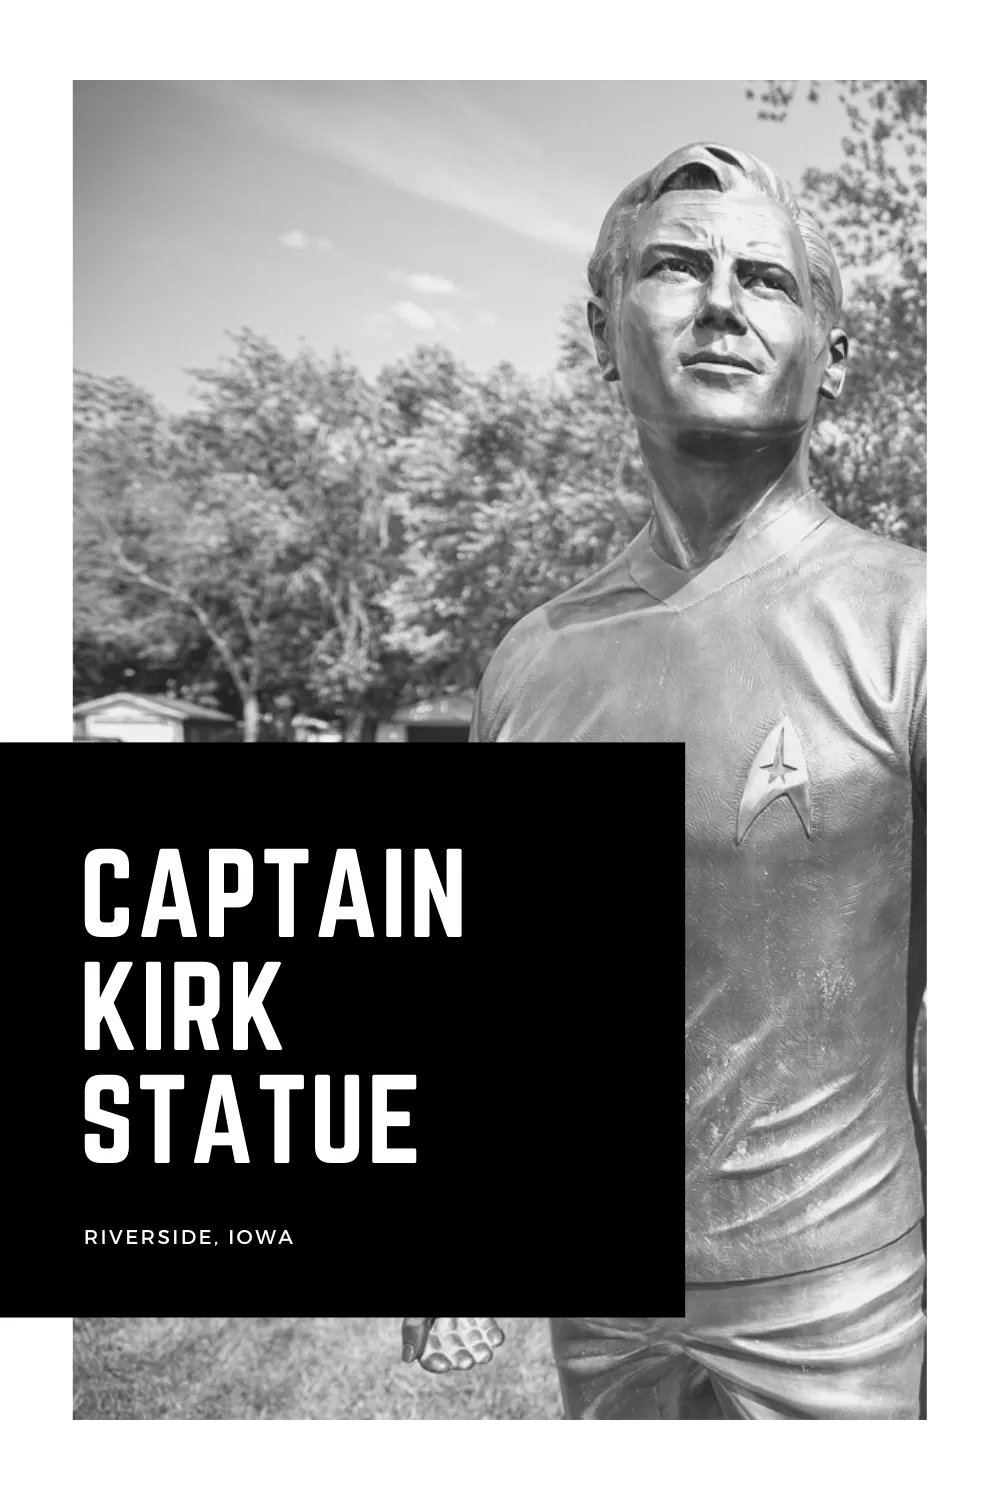 The bronze Captain Kirk statue was erected in the small town in Iowa where the Star Trek hero will eventually be born in 2228. Find this roadside attraction known for being the "future birthplace of Captain James t. Kirk" - the captain of Stark Trek's Starship Enterprise.  #StarTrek #IowaRoadsideAttractions #IowaRoadsideAttraction #RoadsideAttractions #RoadsideAttraction #RoadTrip #IowaRoadTrip #IowaThingsToDo #IowaRoadTripBucketLists #IowaBucketList #IowaRoadTripIdeas #IowaTravel